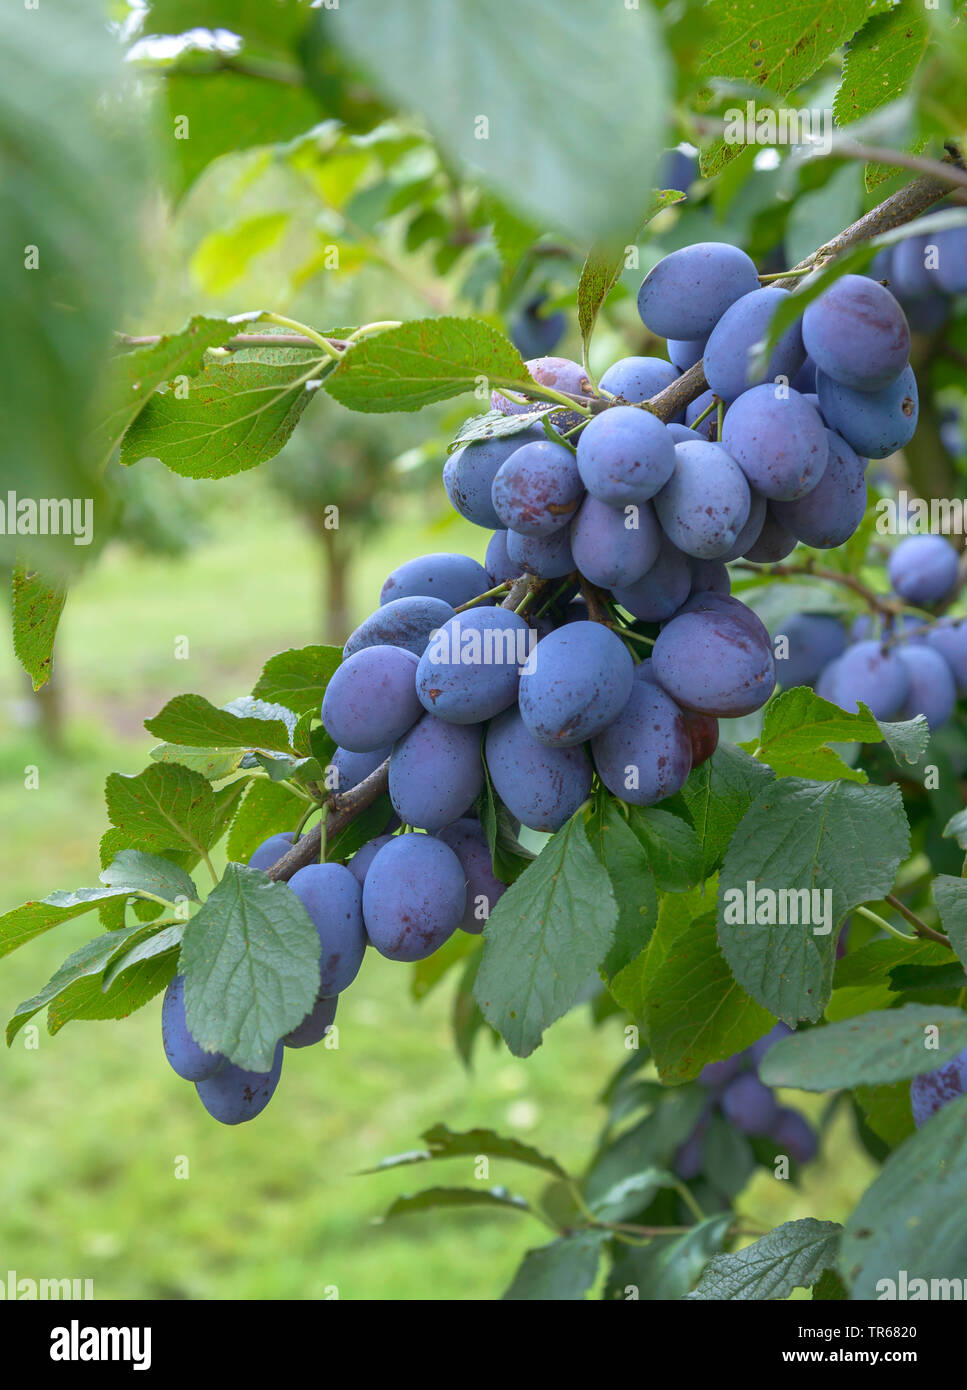 Pflaume (Prunus domestica 'Cacaks Fruchtbare', Prunus domestica Cacaks Fruchtbare), Pflaumen auf einem Baum, Sorte Cacaks Fruchtbare Stockfoto